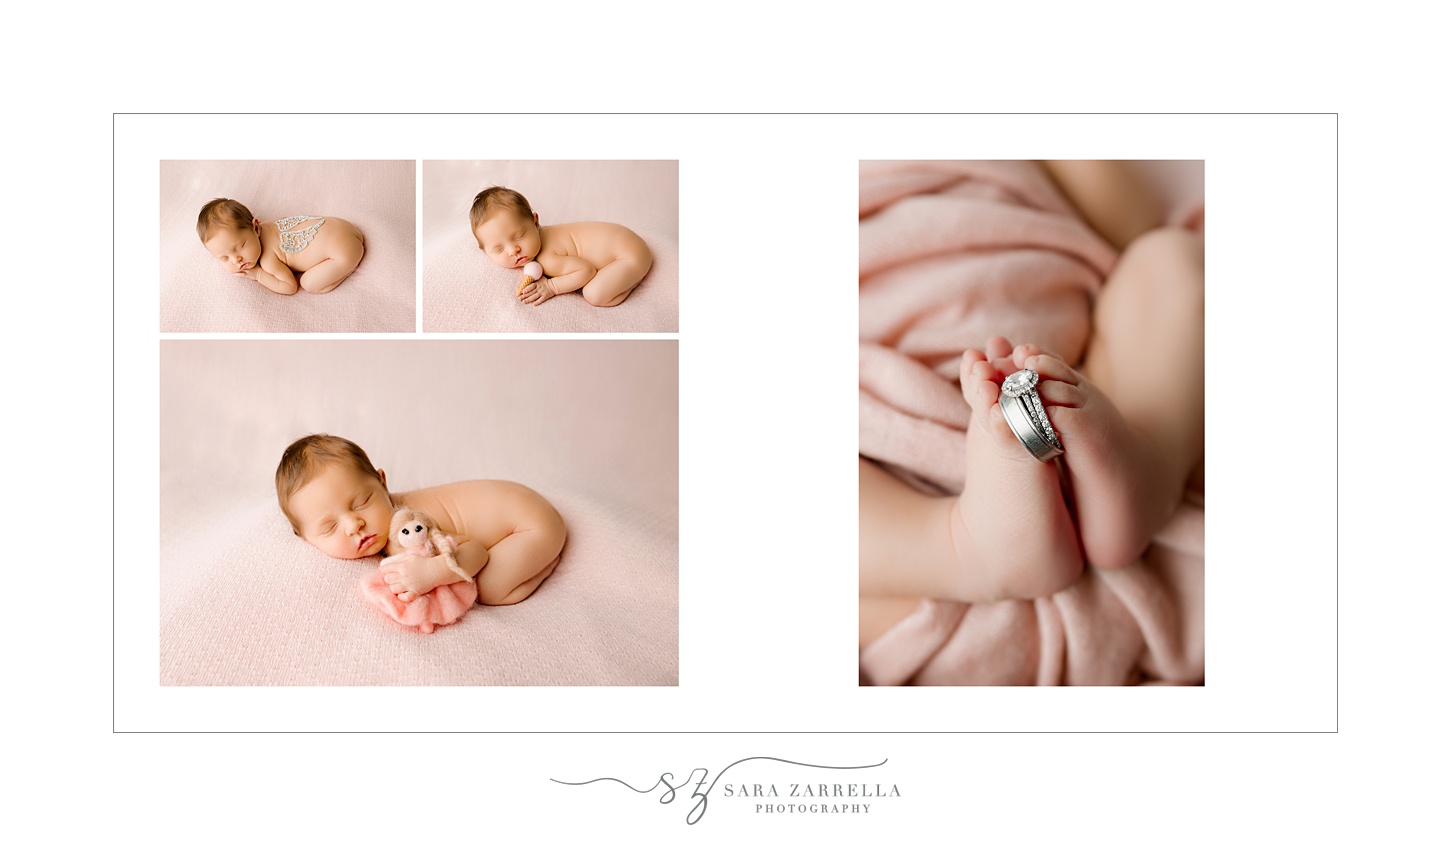 storybook heirloom album for newborn session with RI newborn photographer Sara Zarrella Photography